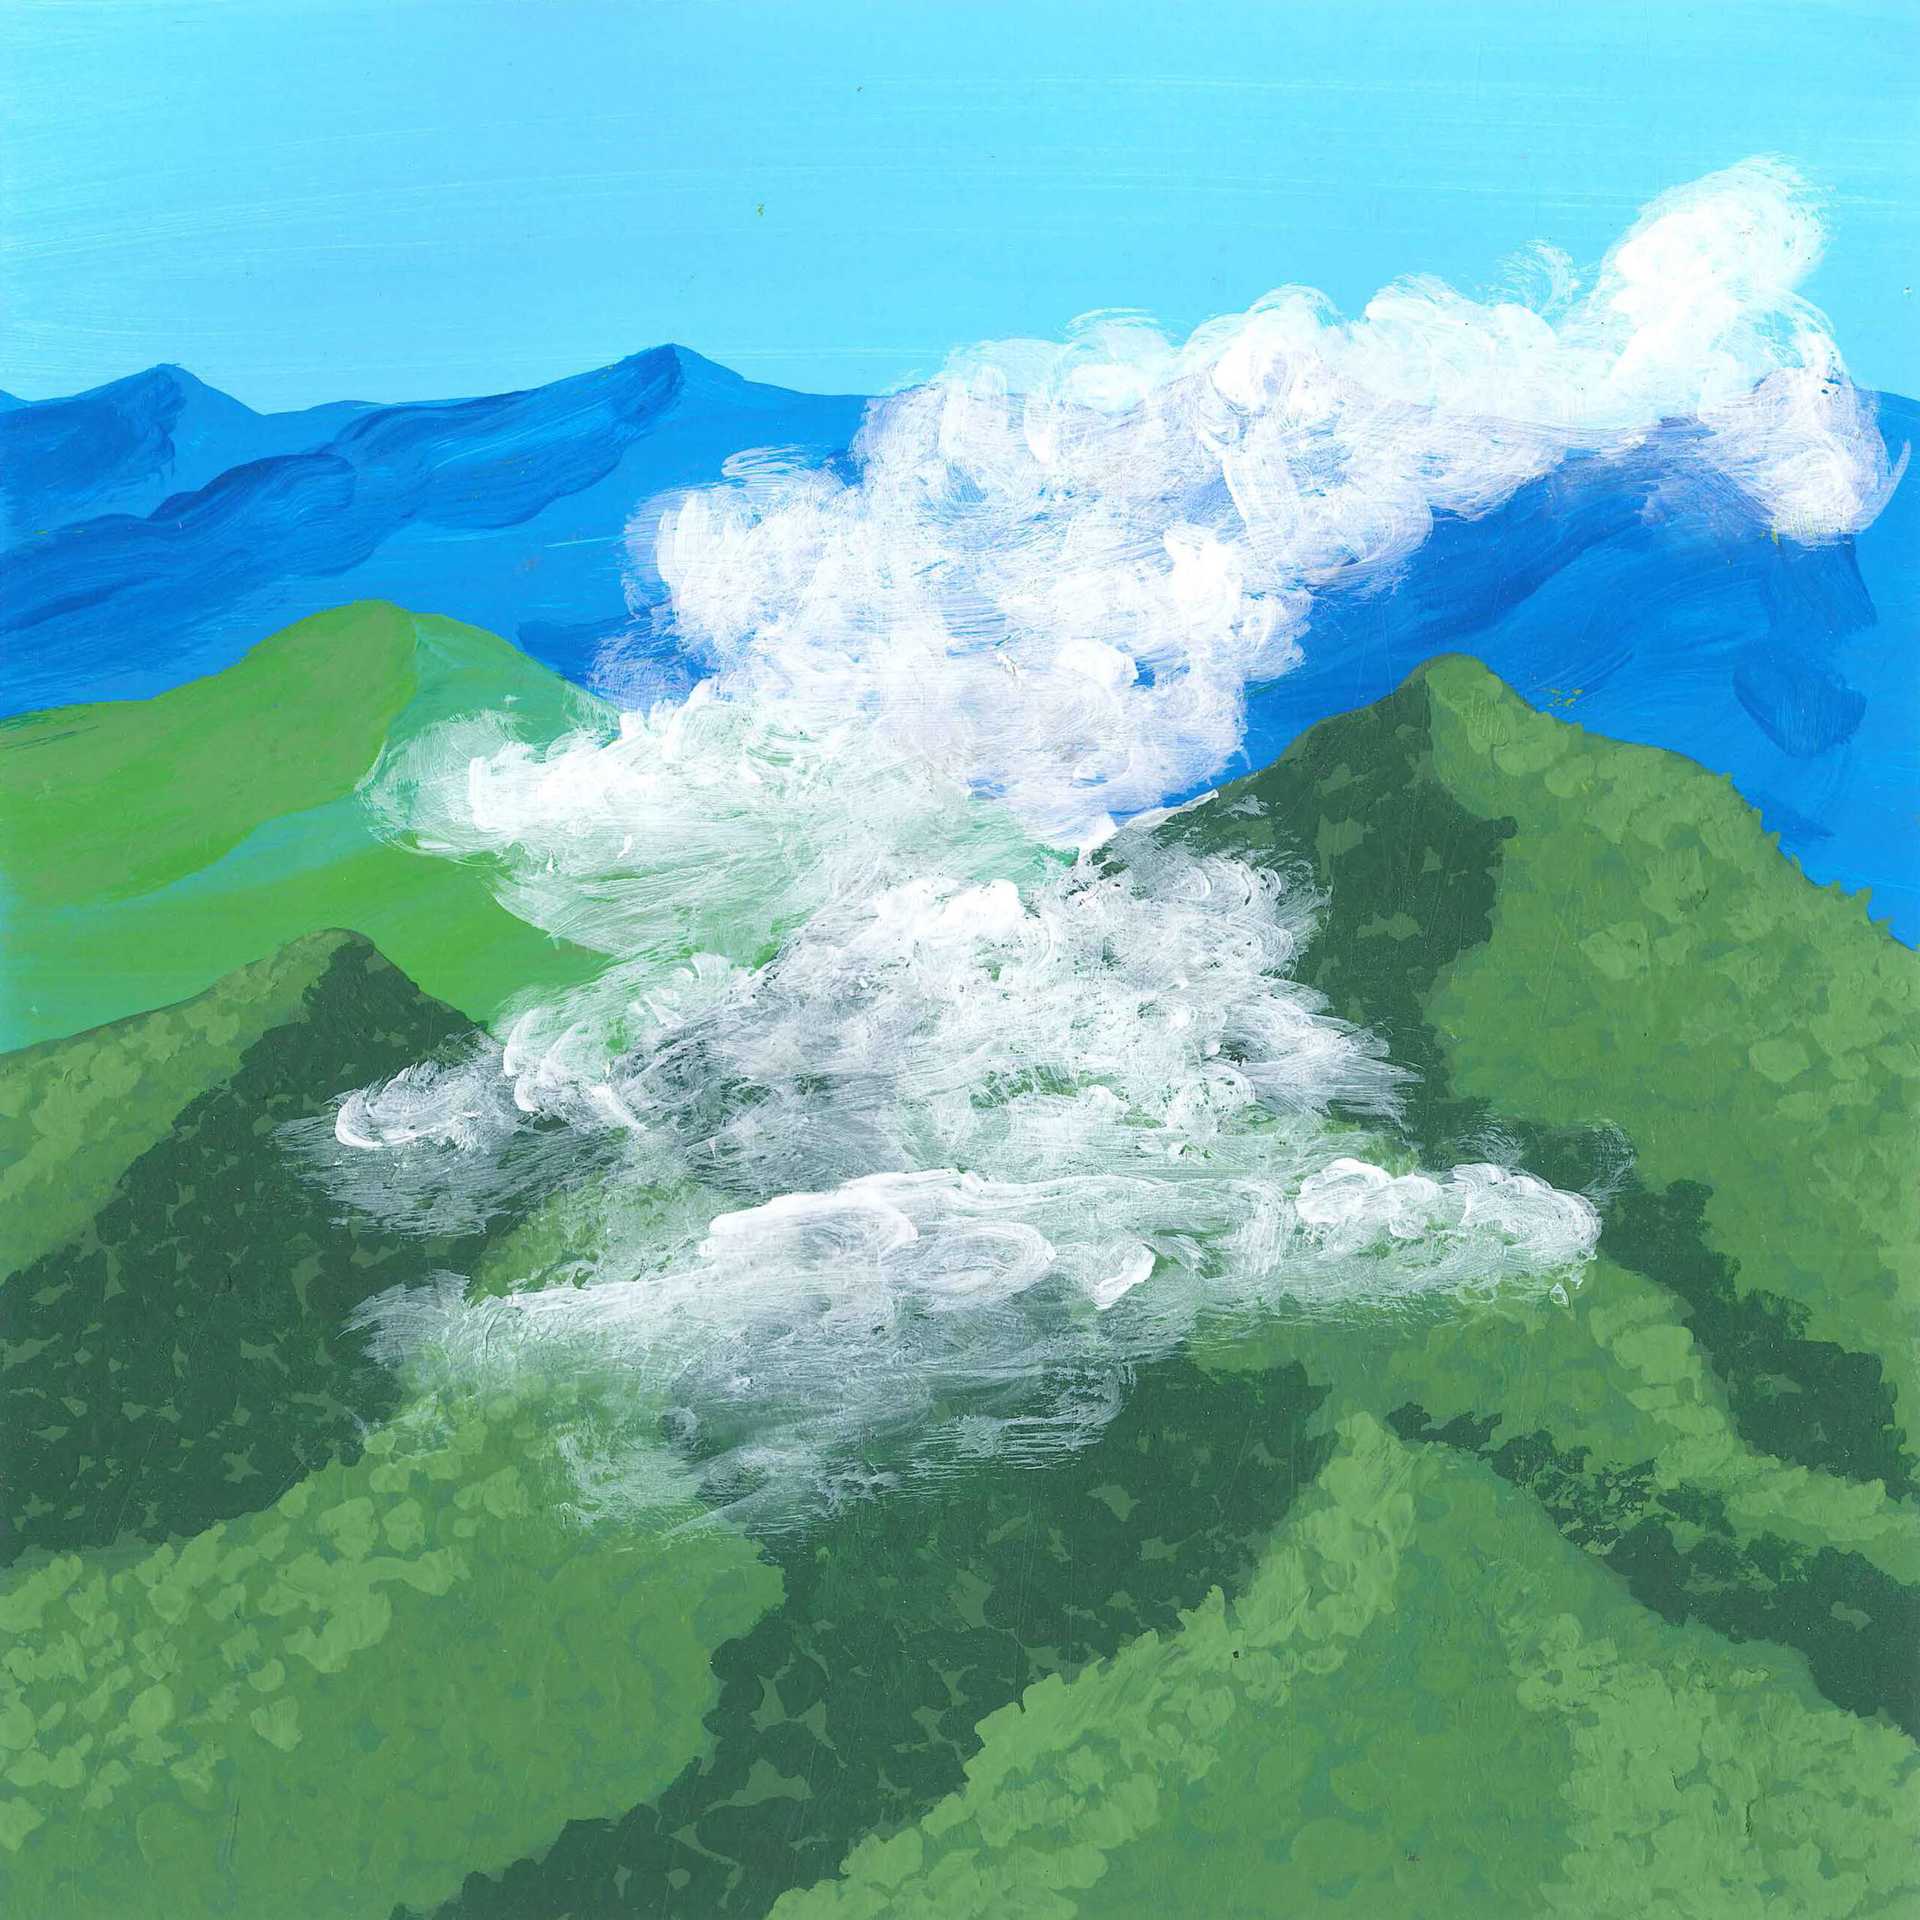 New Guinea Cloud Forest - nature landscape painting - earth.fm